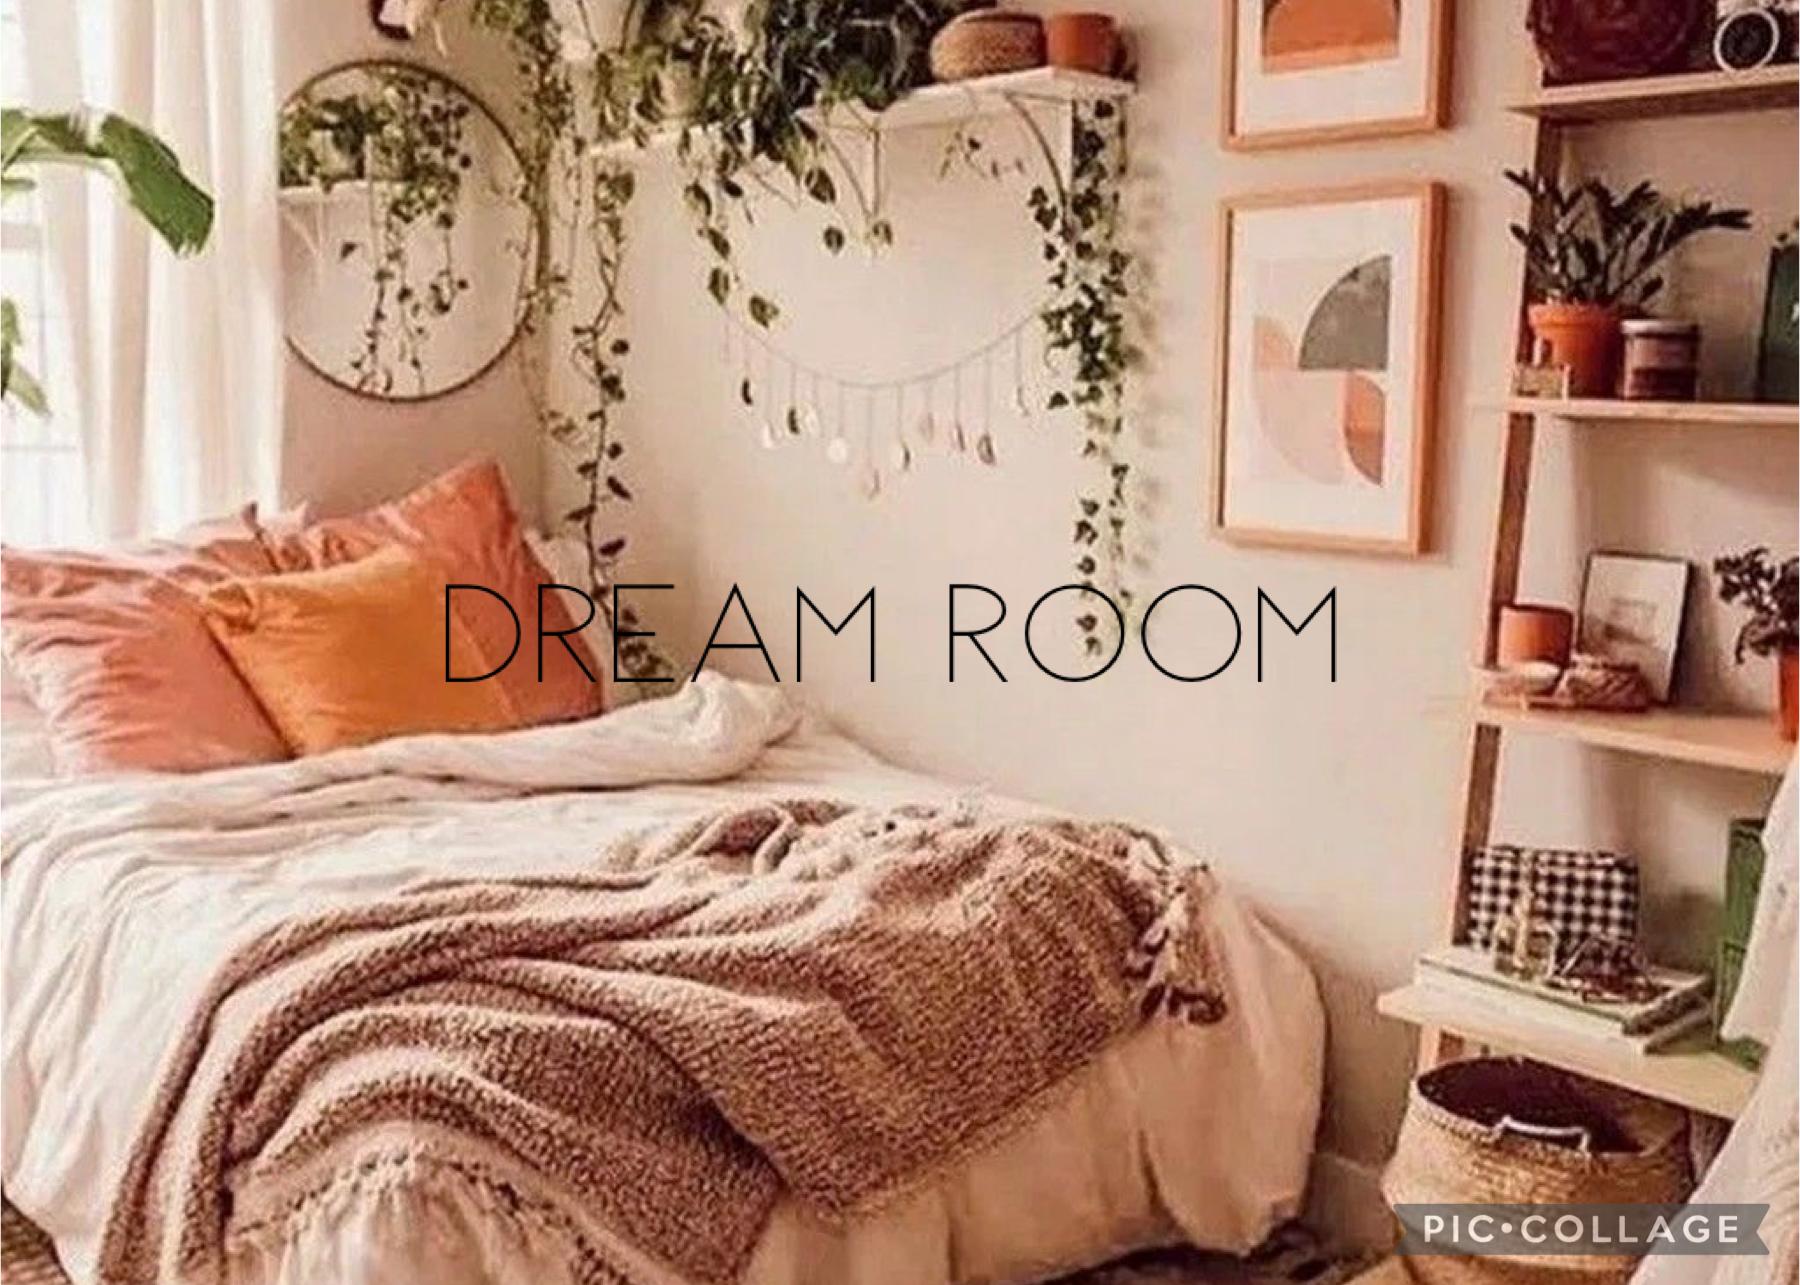 My dream room!